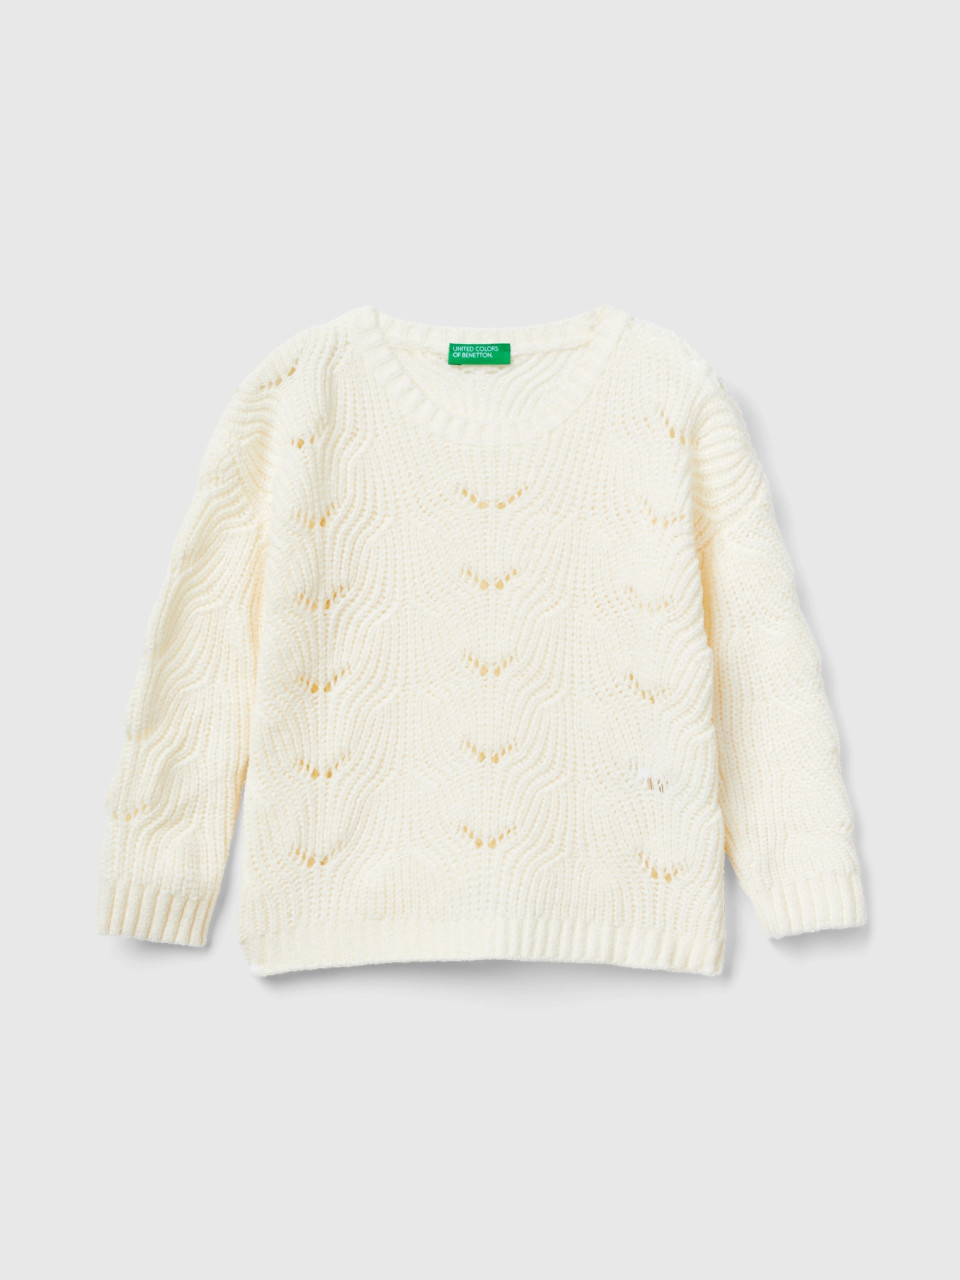 Benetton, Knit Chenille Sweater, Creamy White, Kids